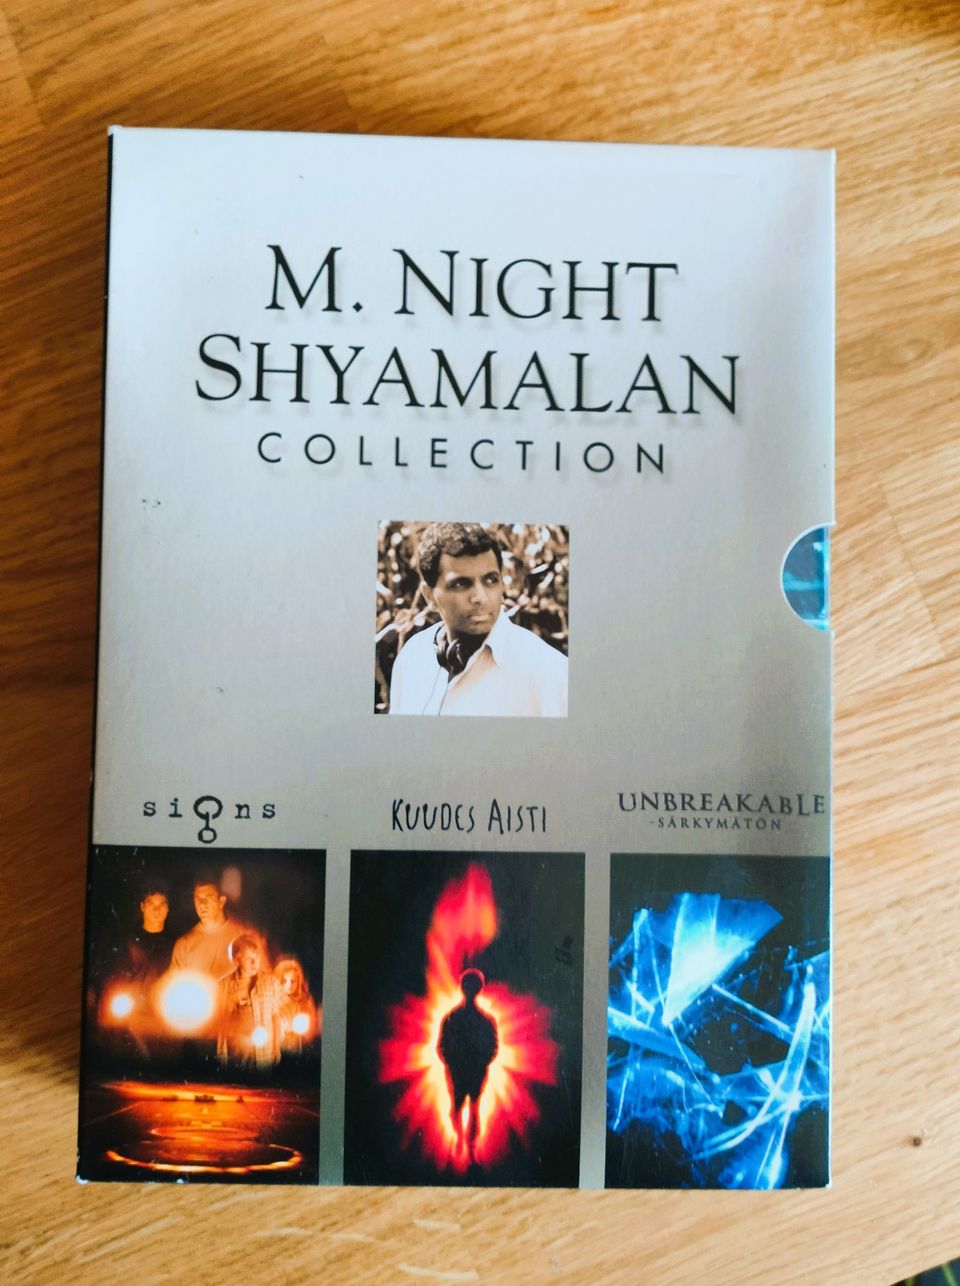 M. Night Shyamalan DVD collection: Signs, Kuudes aisti, Unbreakable